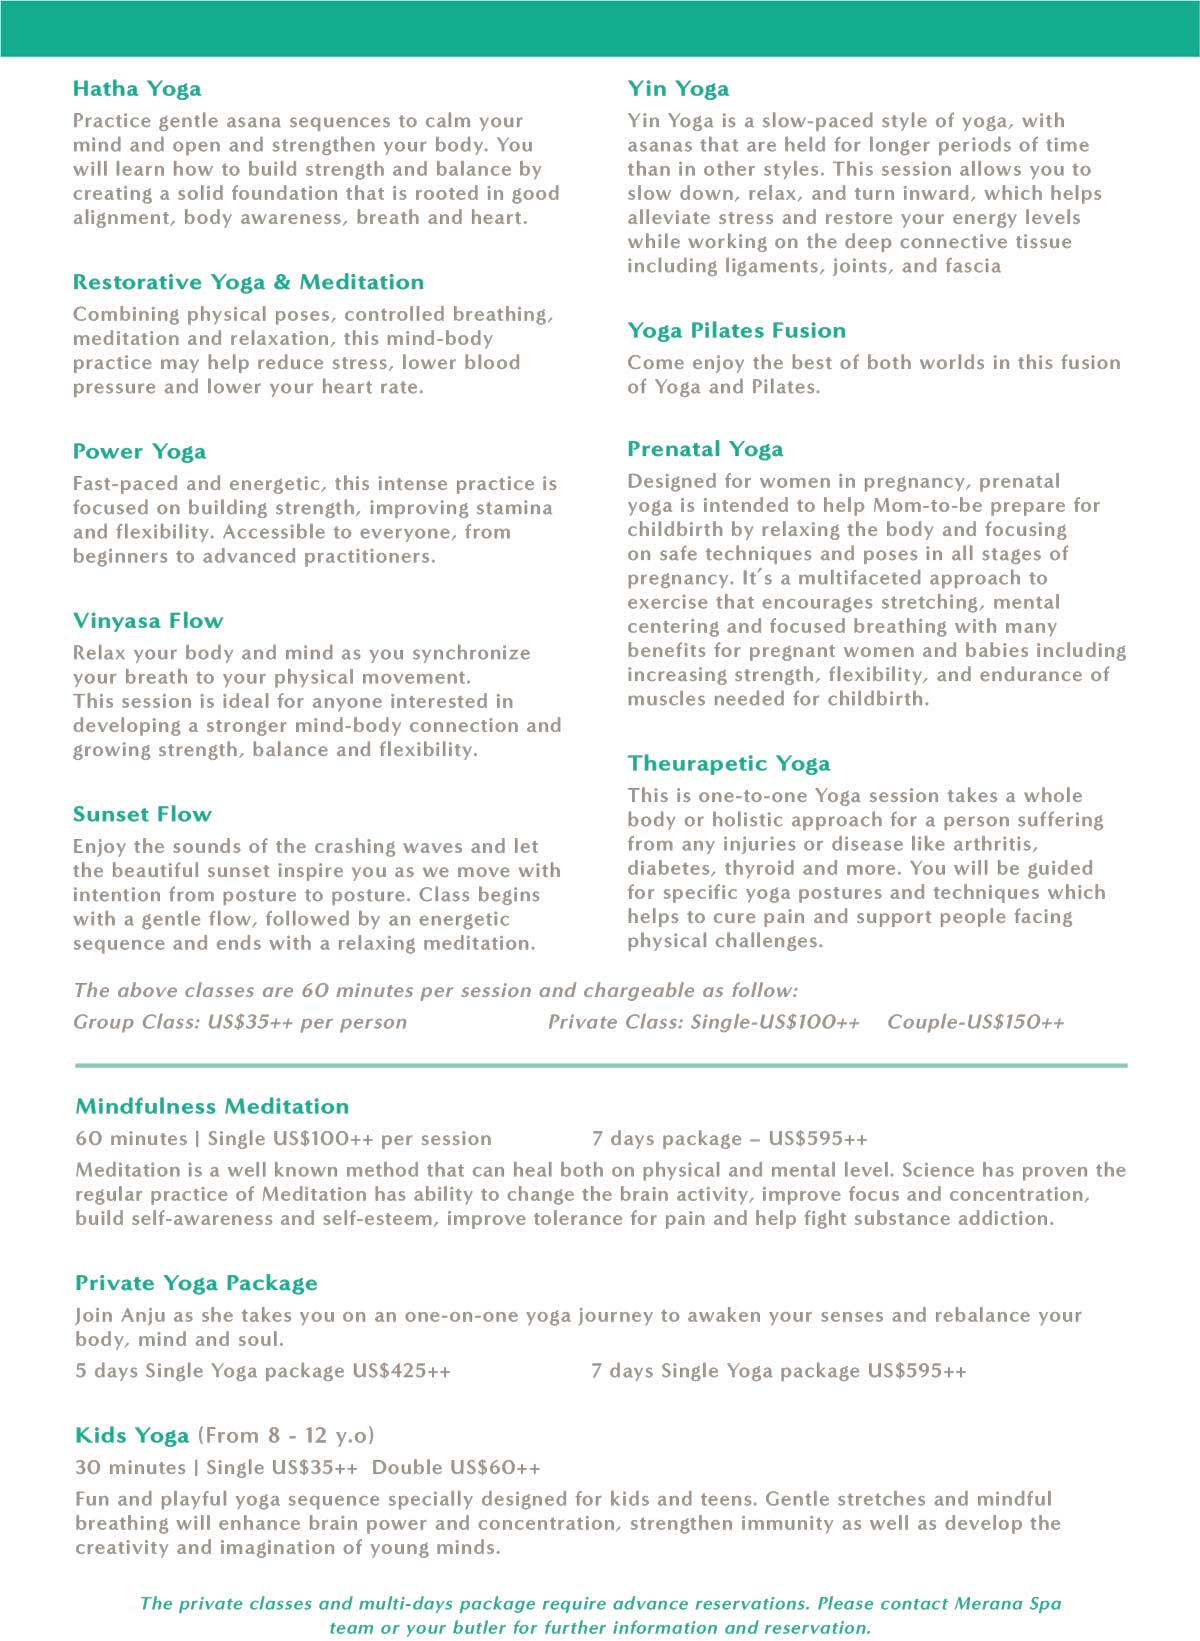 Vakkaru maldives yoga program page 2